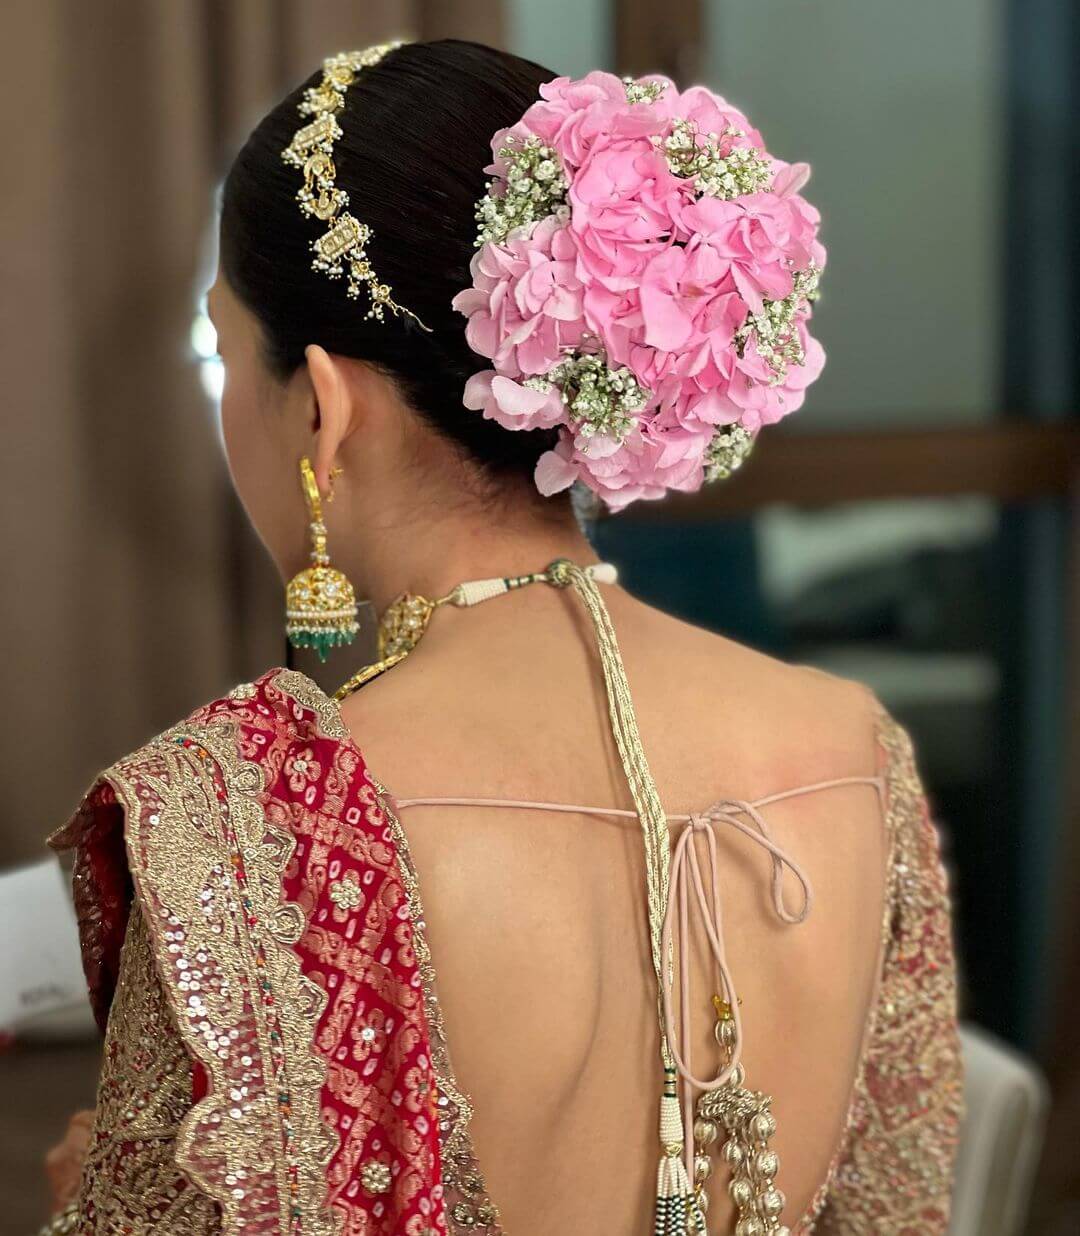  Pink Hydrangeas Or Gypsies, With Wedding Look For Bride